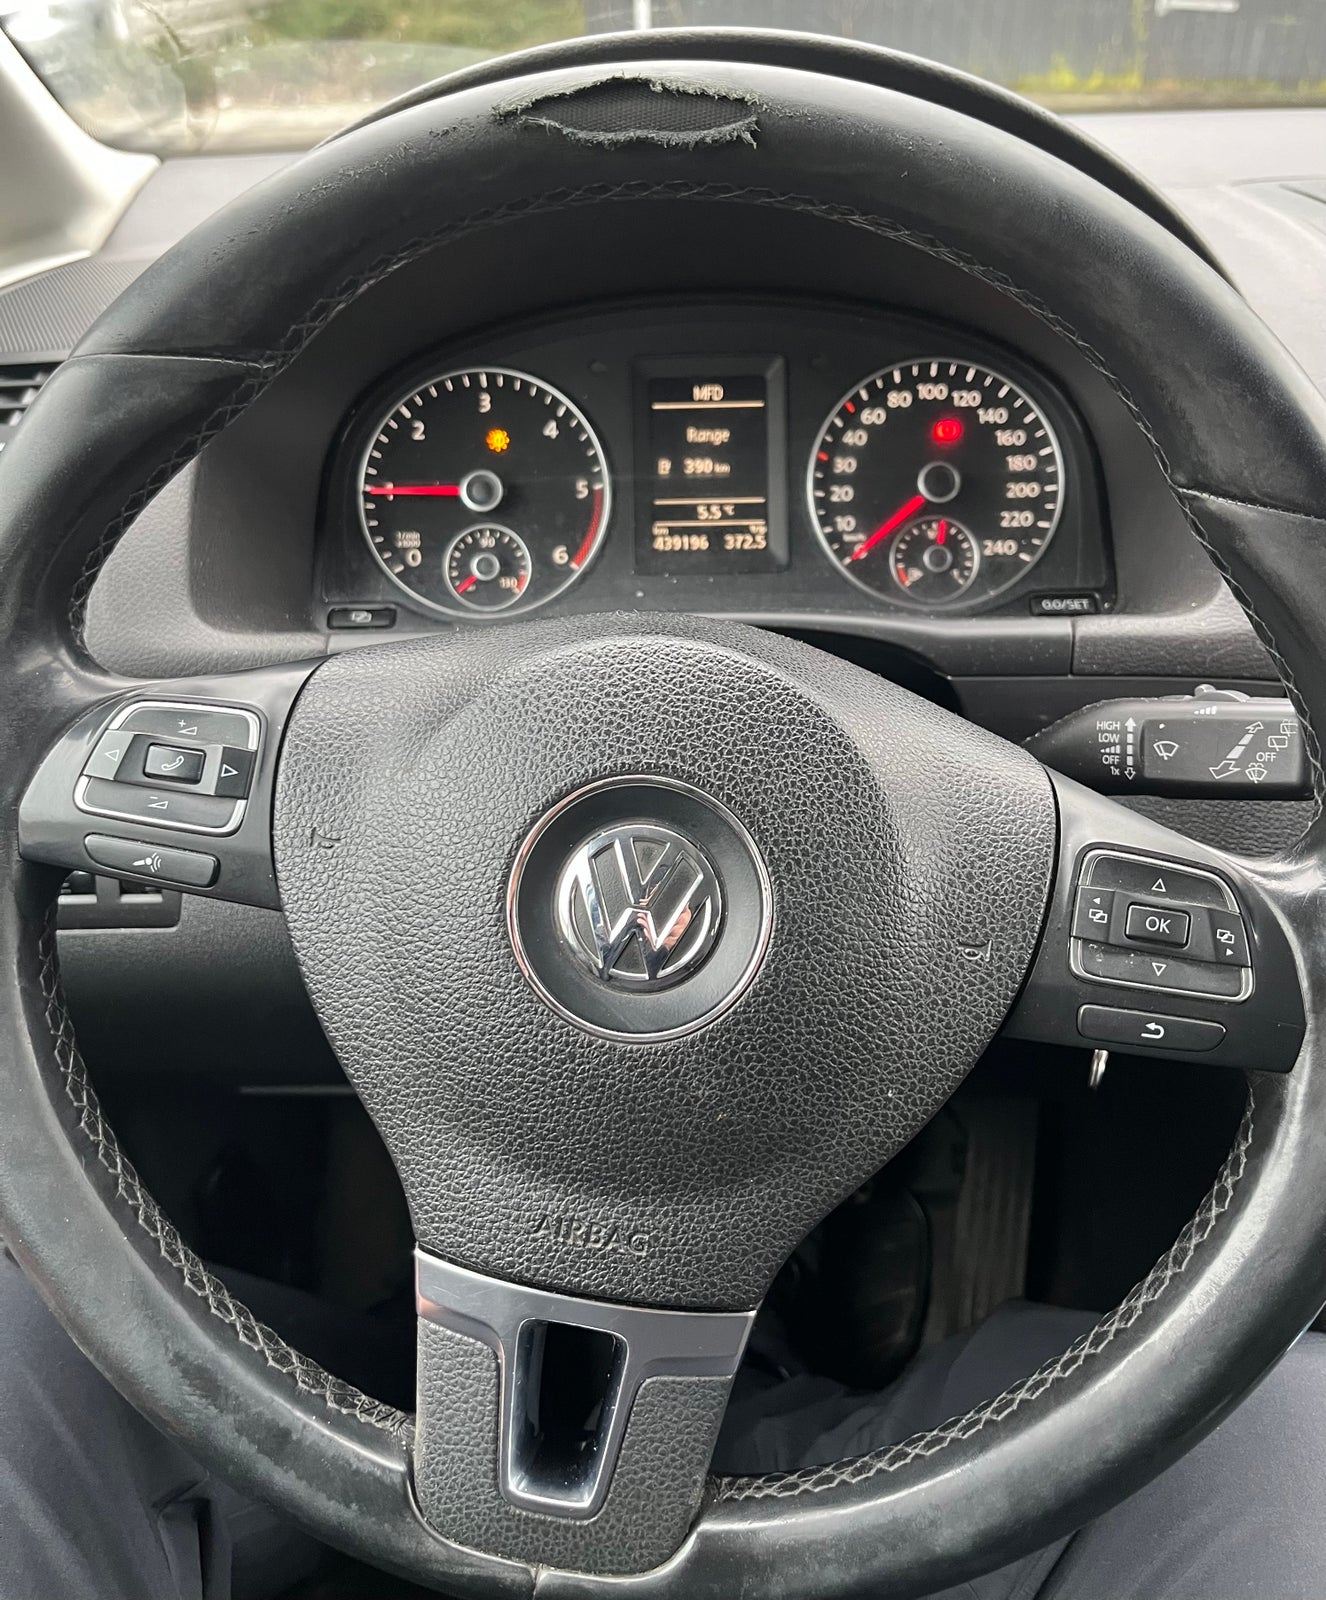 VW Touran, 2,0 TDi 140 Comfortline DSG, Diesel